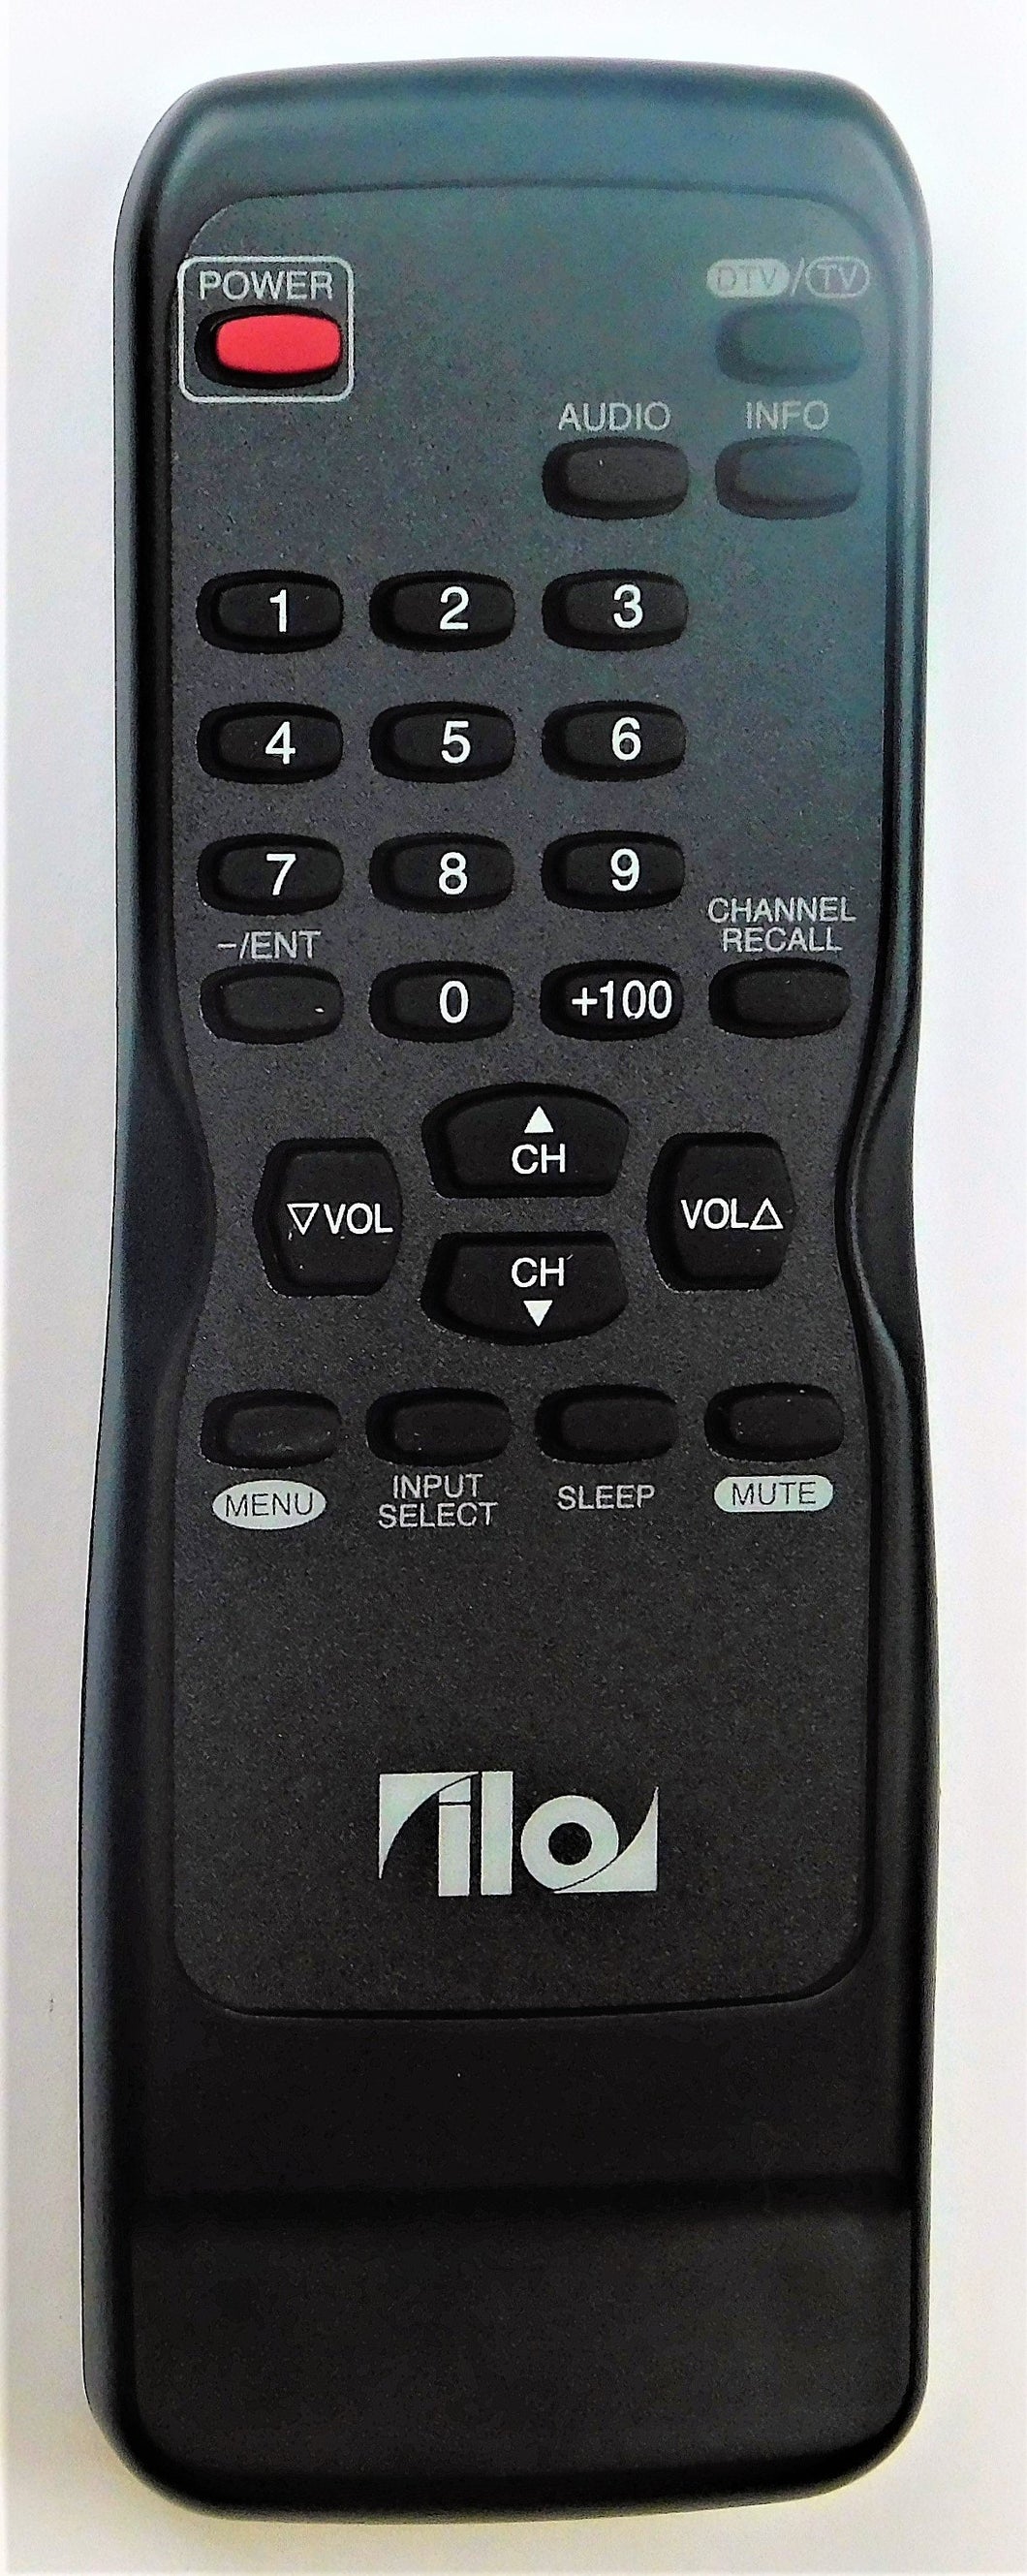 OEM replacement remote control for ILO CRT TVs NE614UE